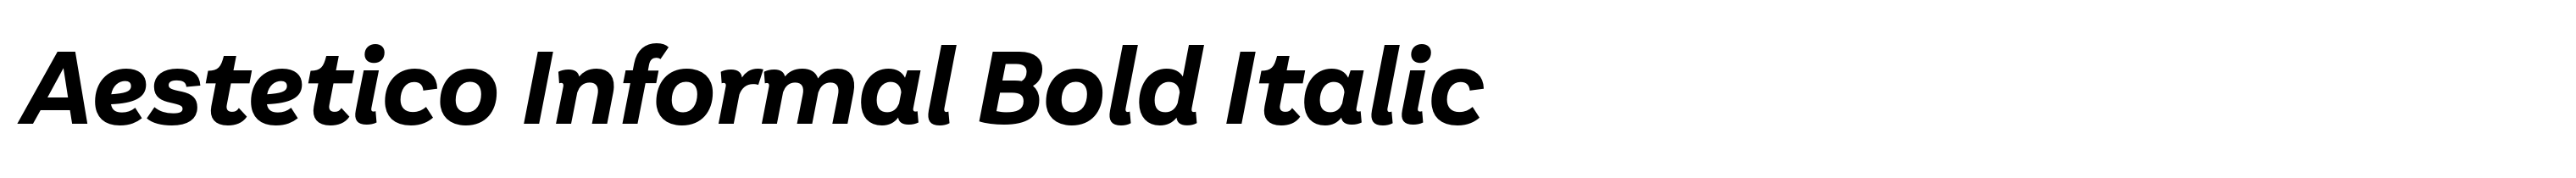 Aestetico Informal Bold Italic